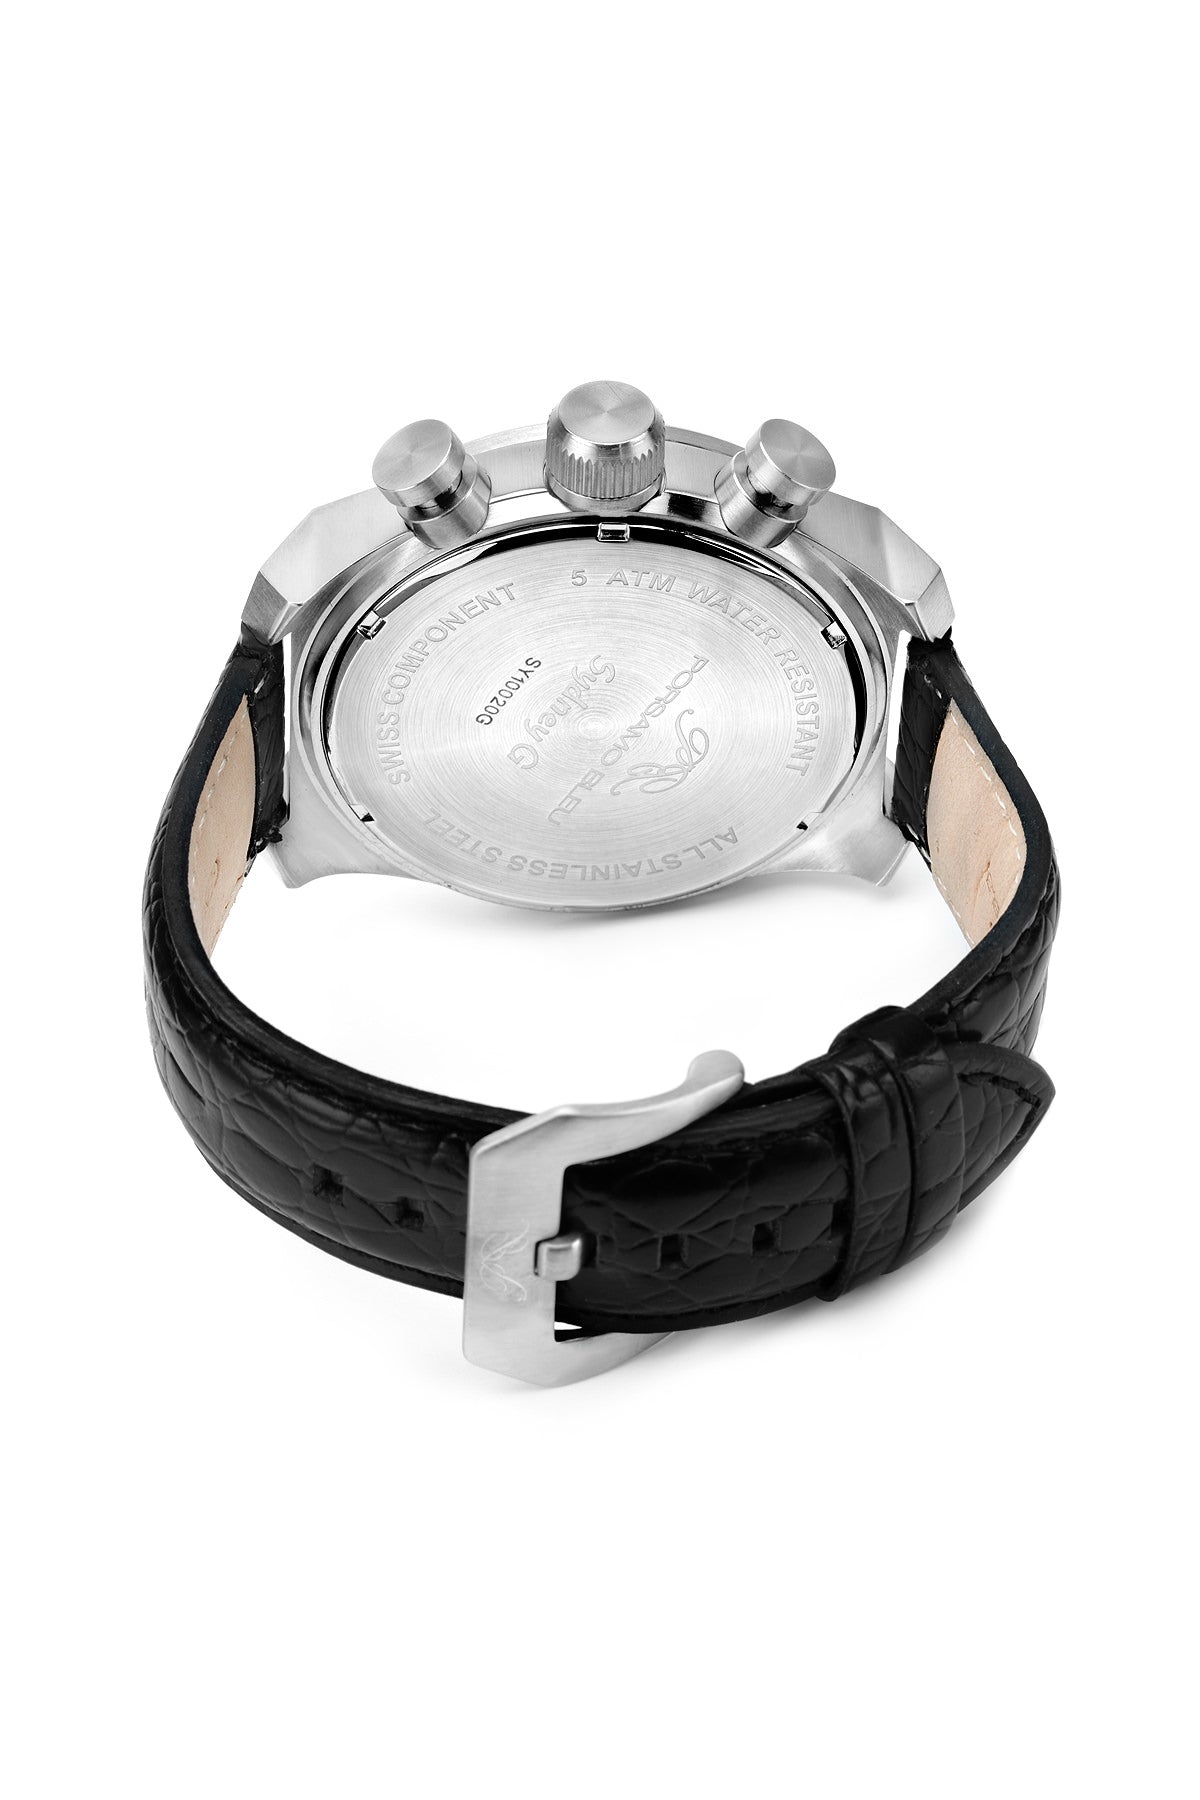 Porsamo Bleu Sydney G luxury men's watch, genuine leather band, silver, black 233ASGL